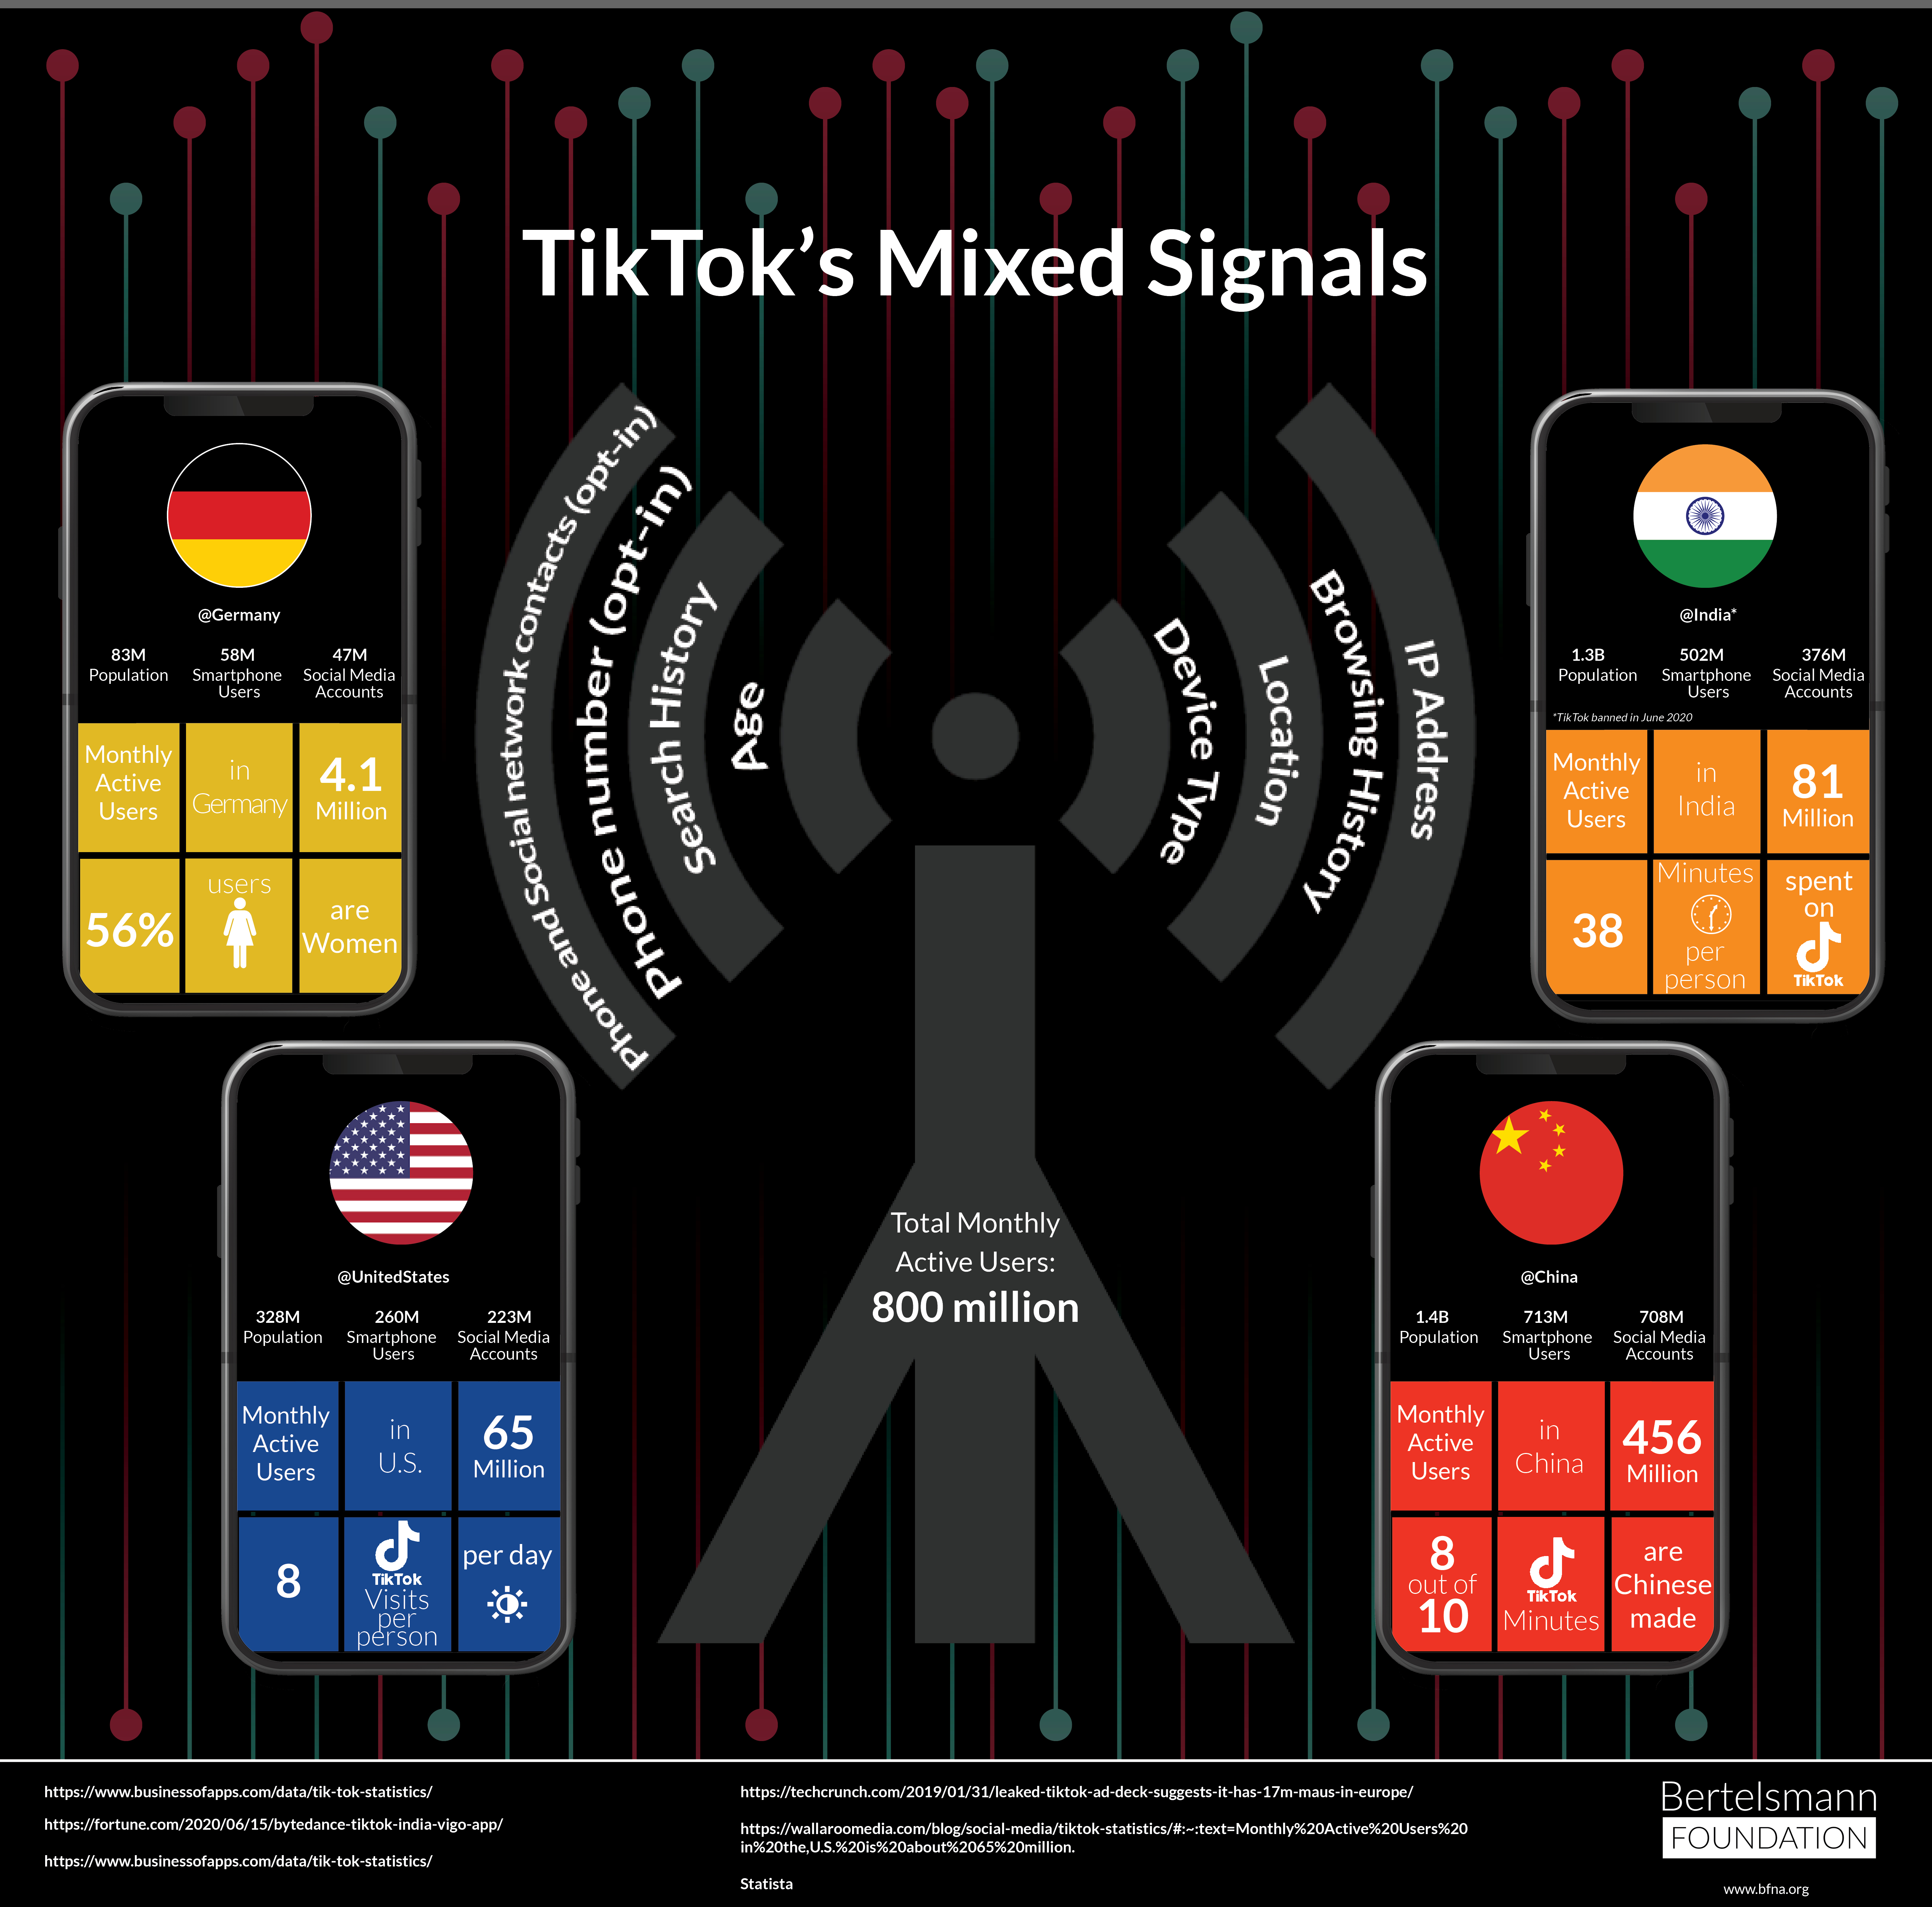 TikTok's Mixed Signals